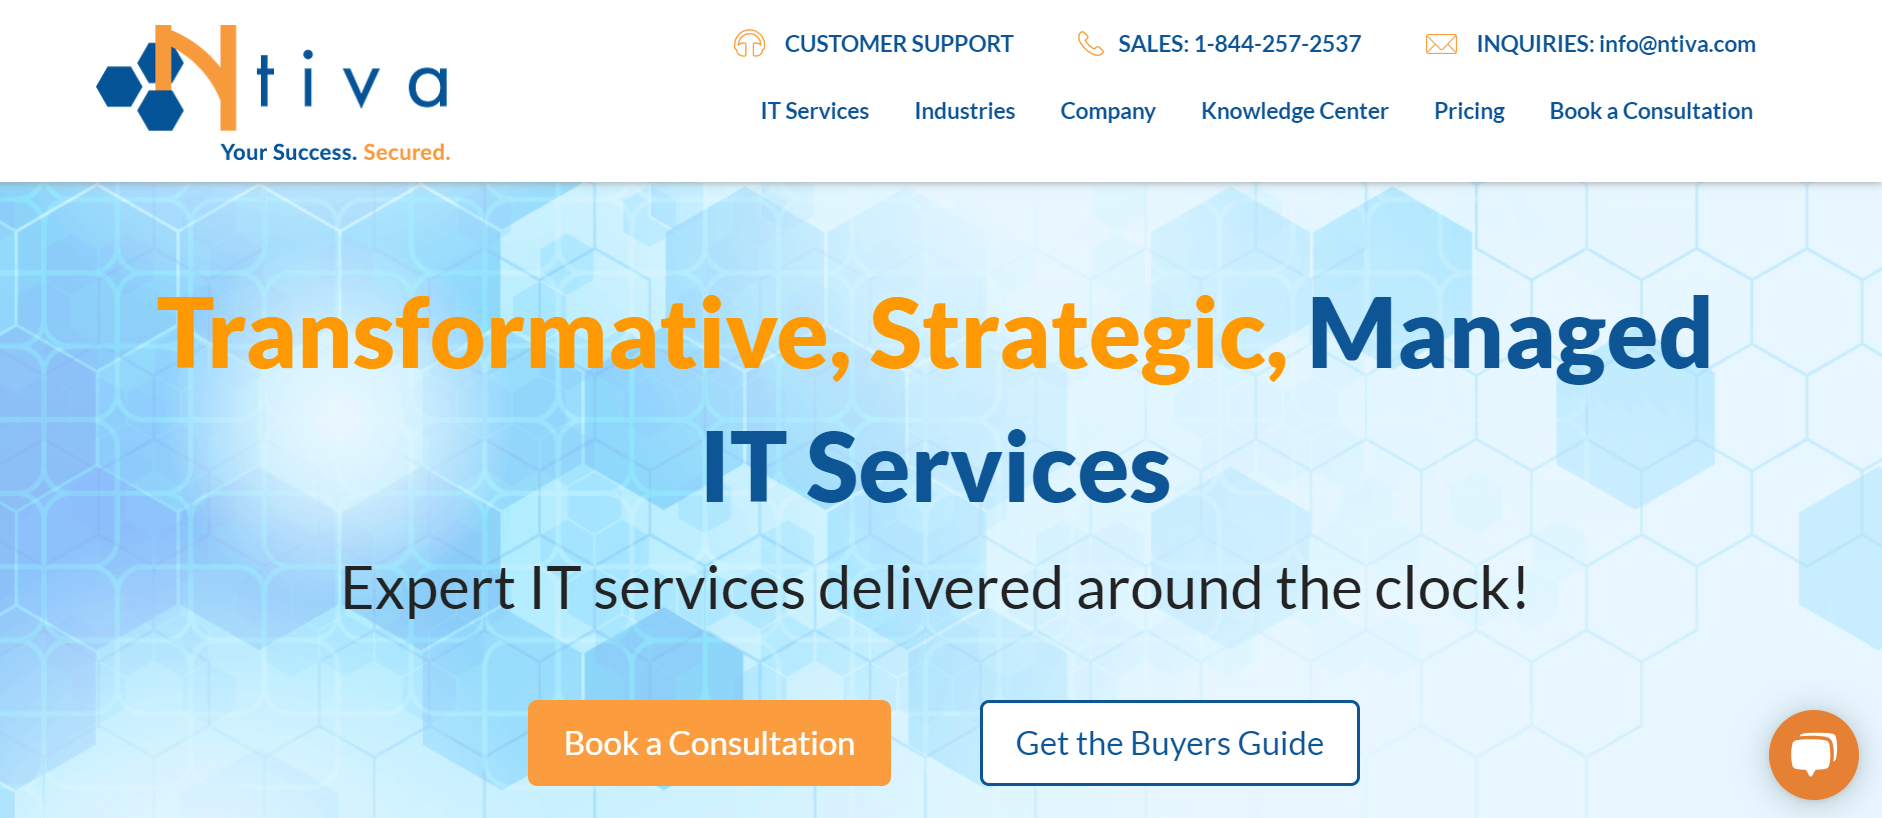 Ntiva homepage: Transformative, Strategic, Managed IT Services. 